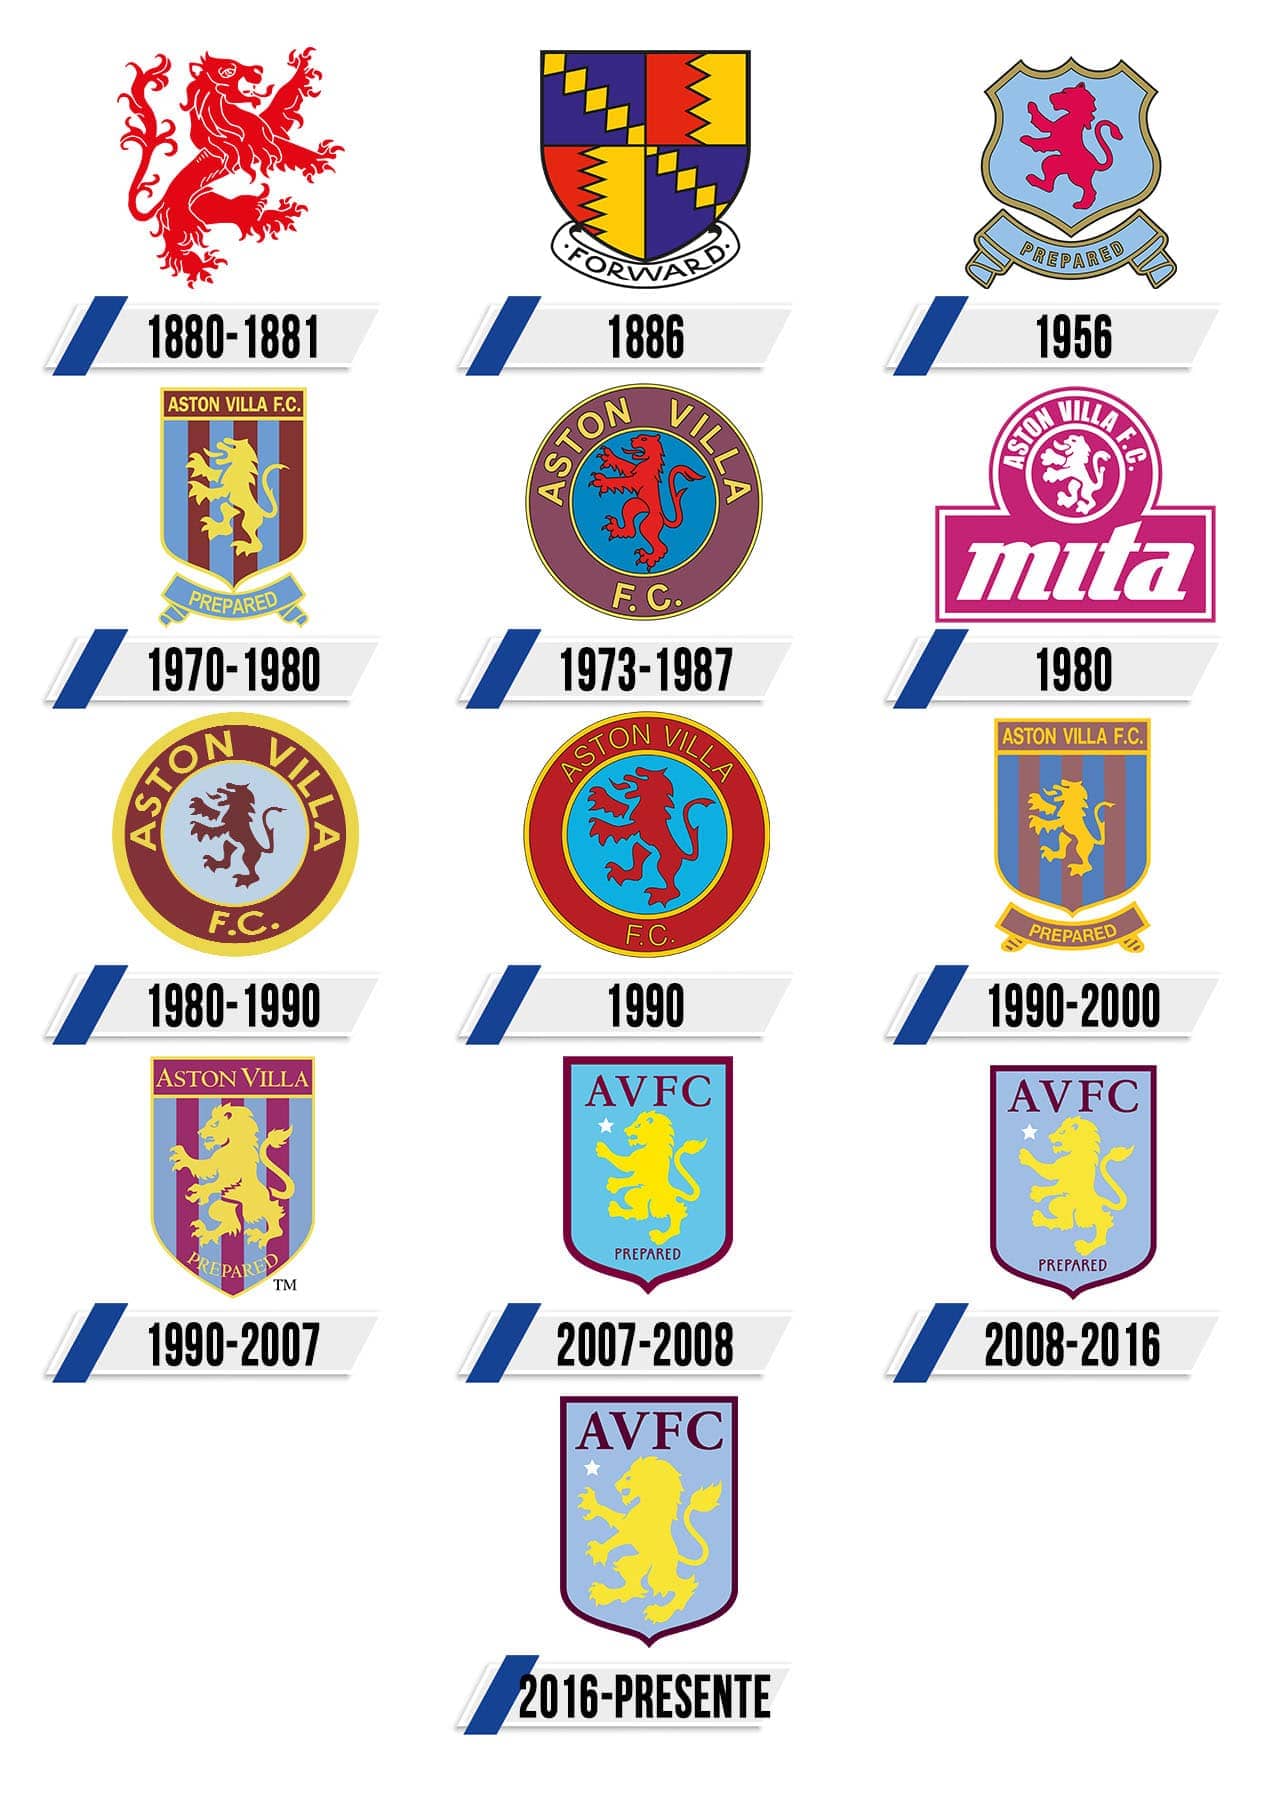 Aston Villa Logo - Aston Villa Archives By Far The Greatest Team - Download aston villa logo now.